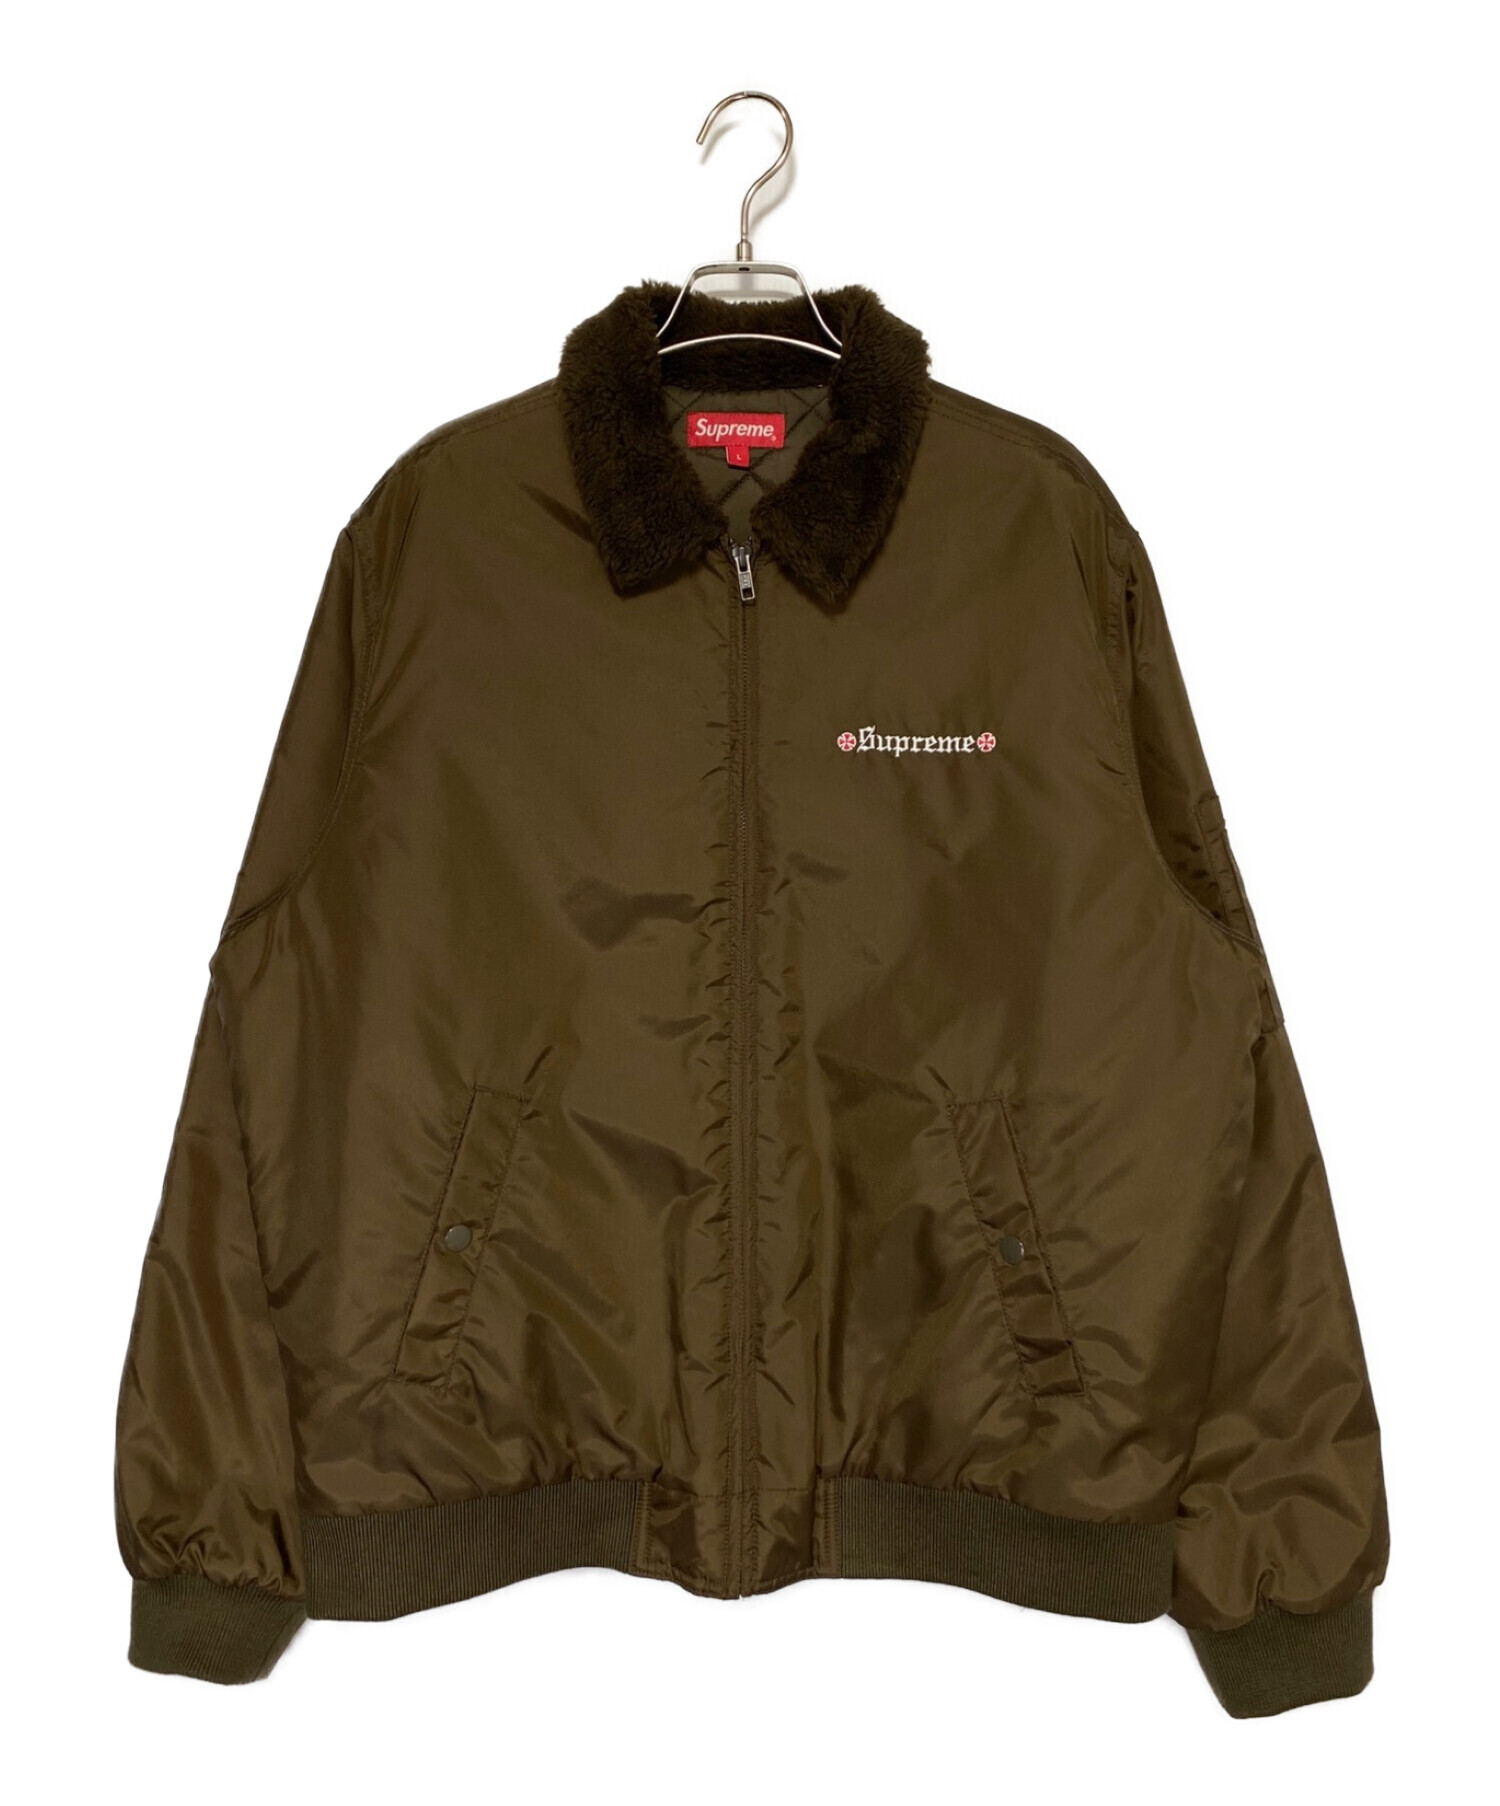 supreme independent bomber jacket ジャケット - ナイロンジャケット